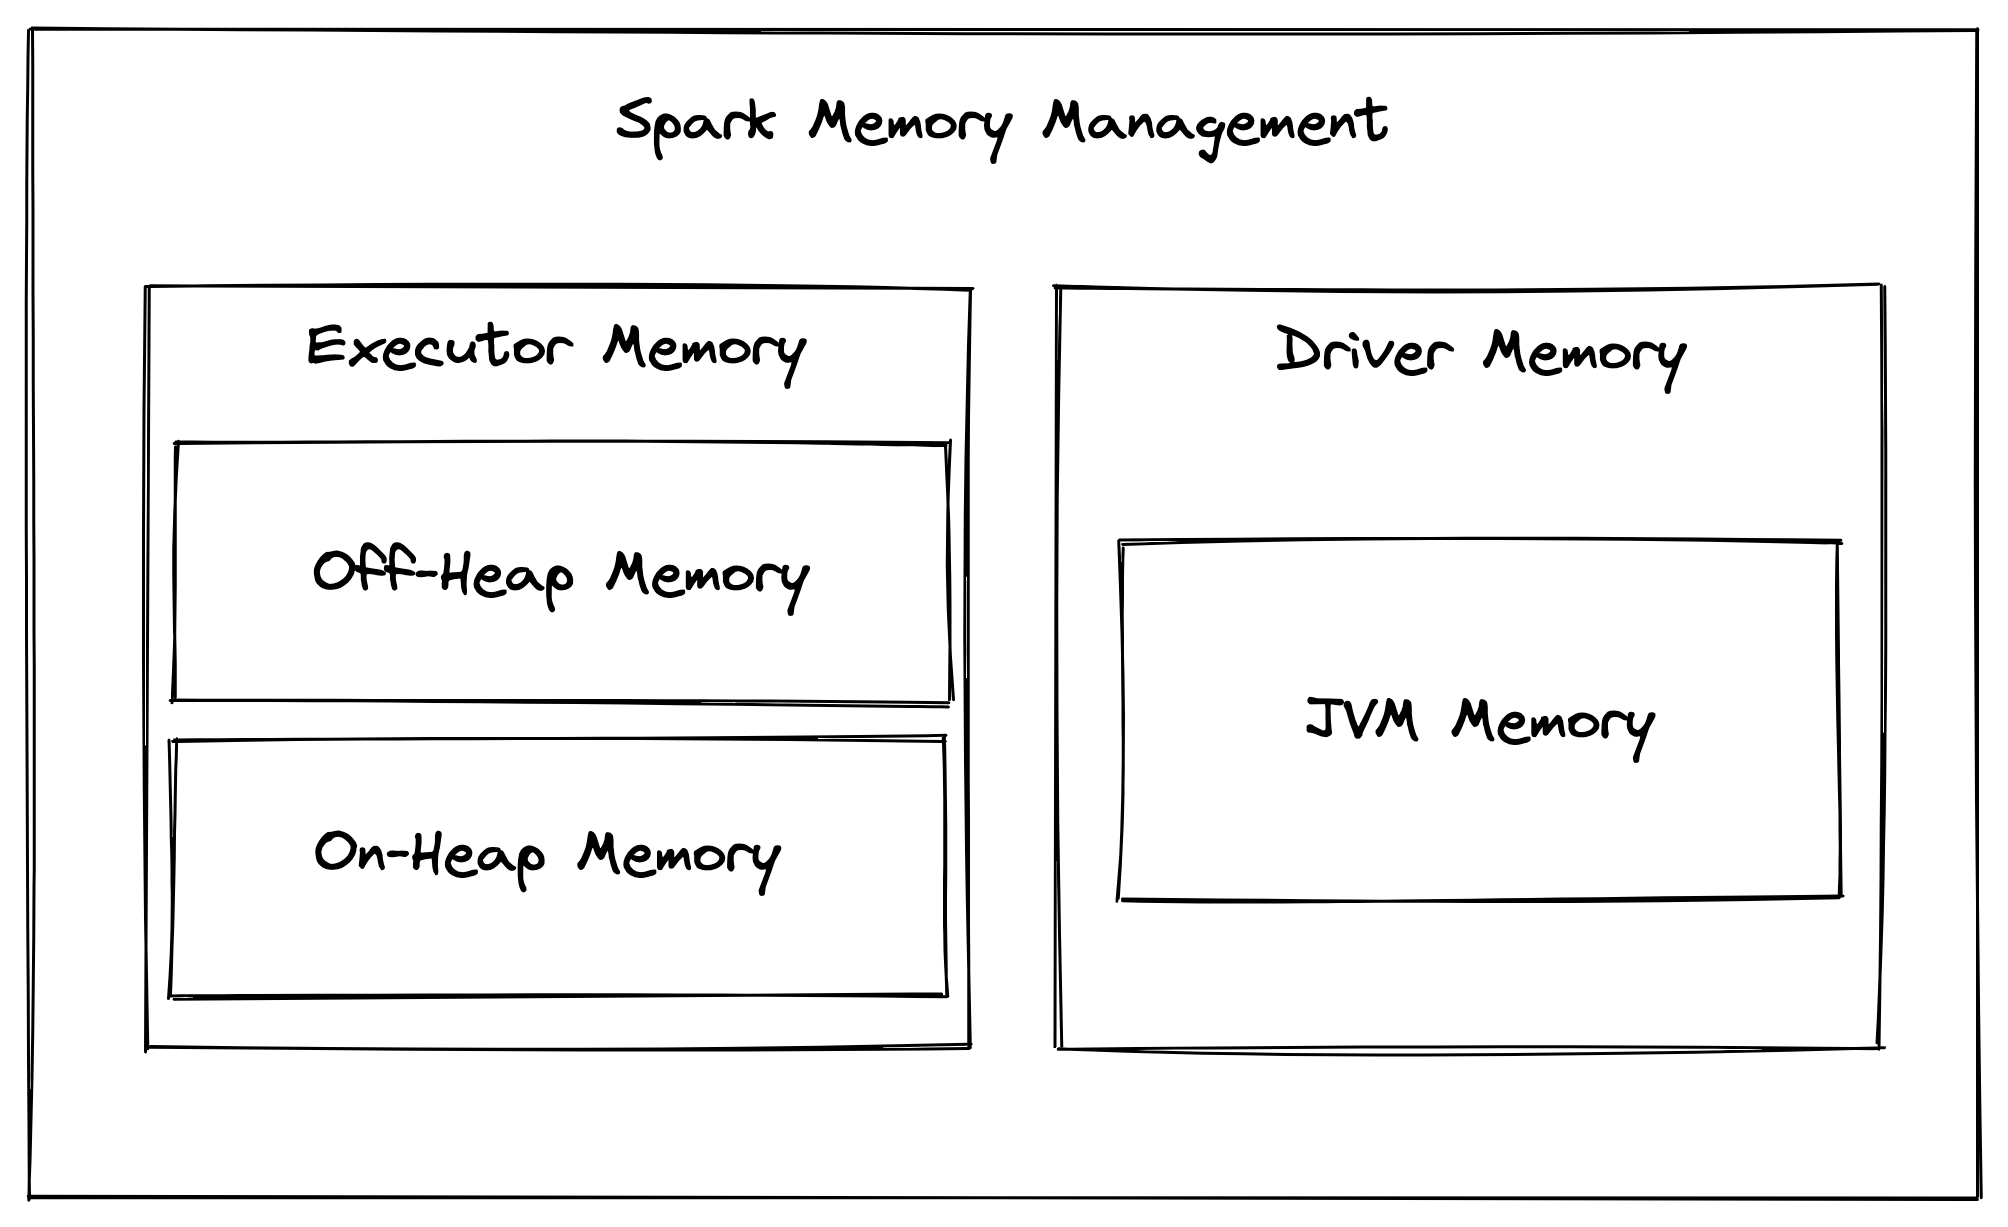 Spark Memory Management